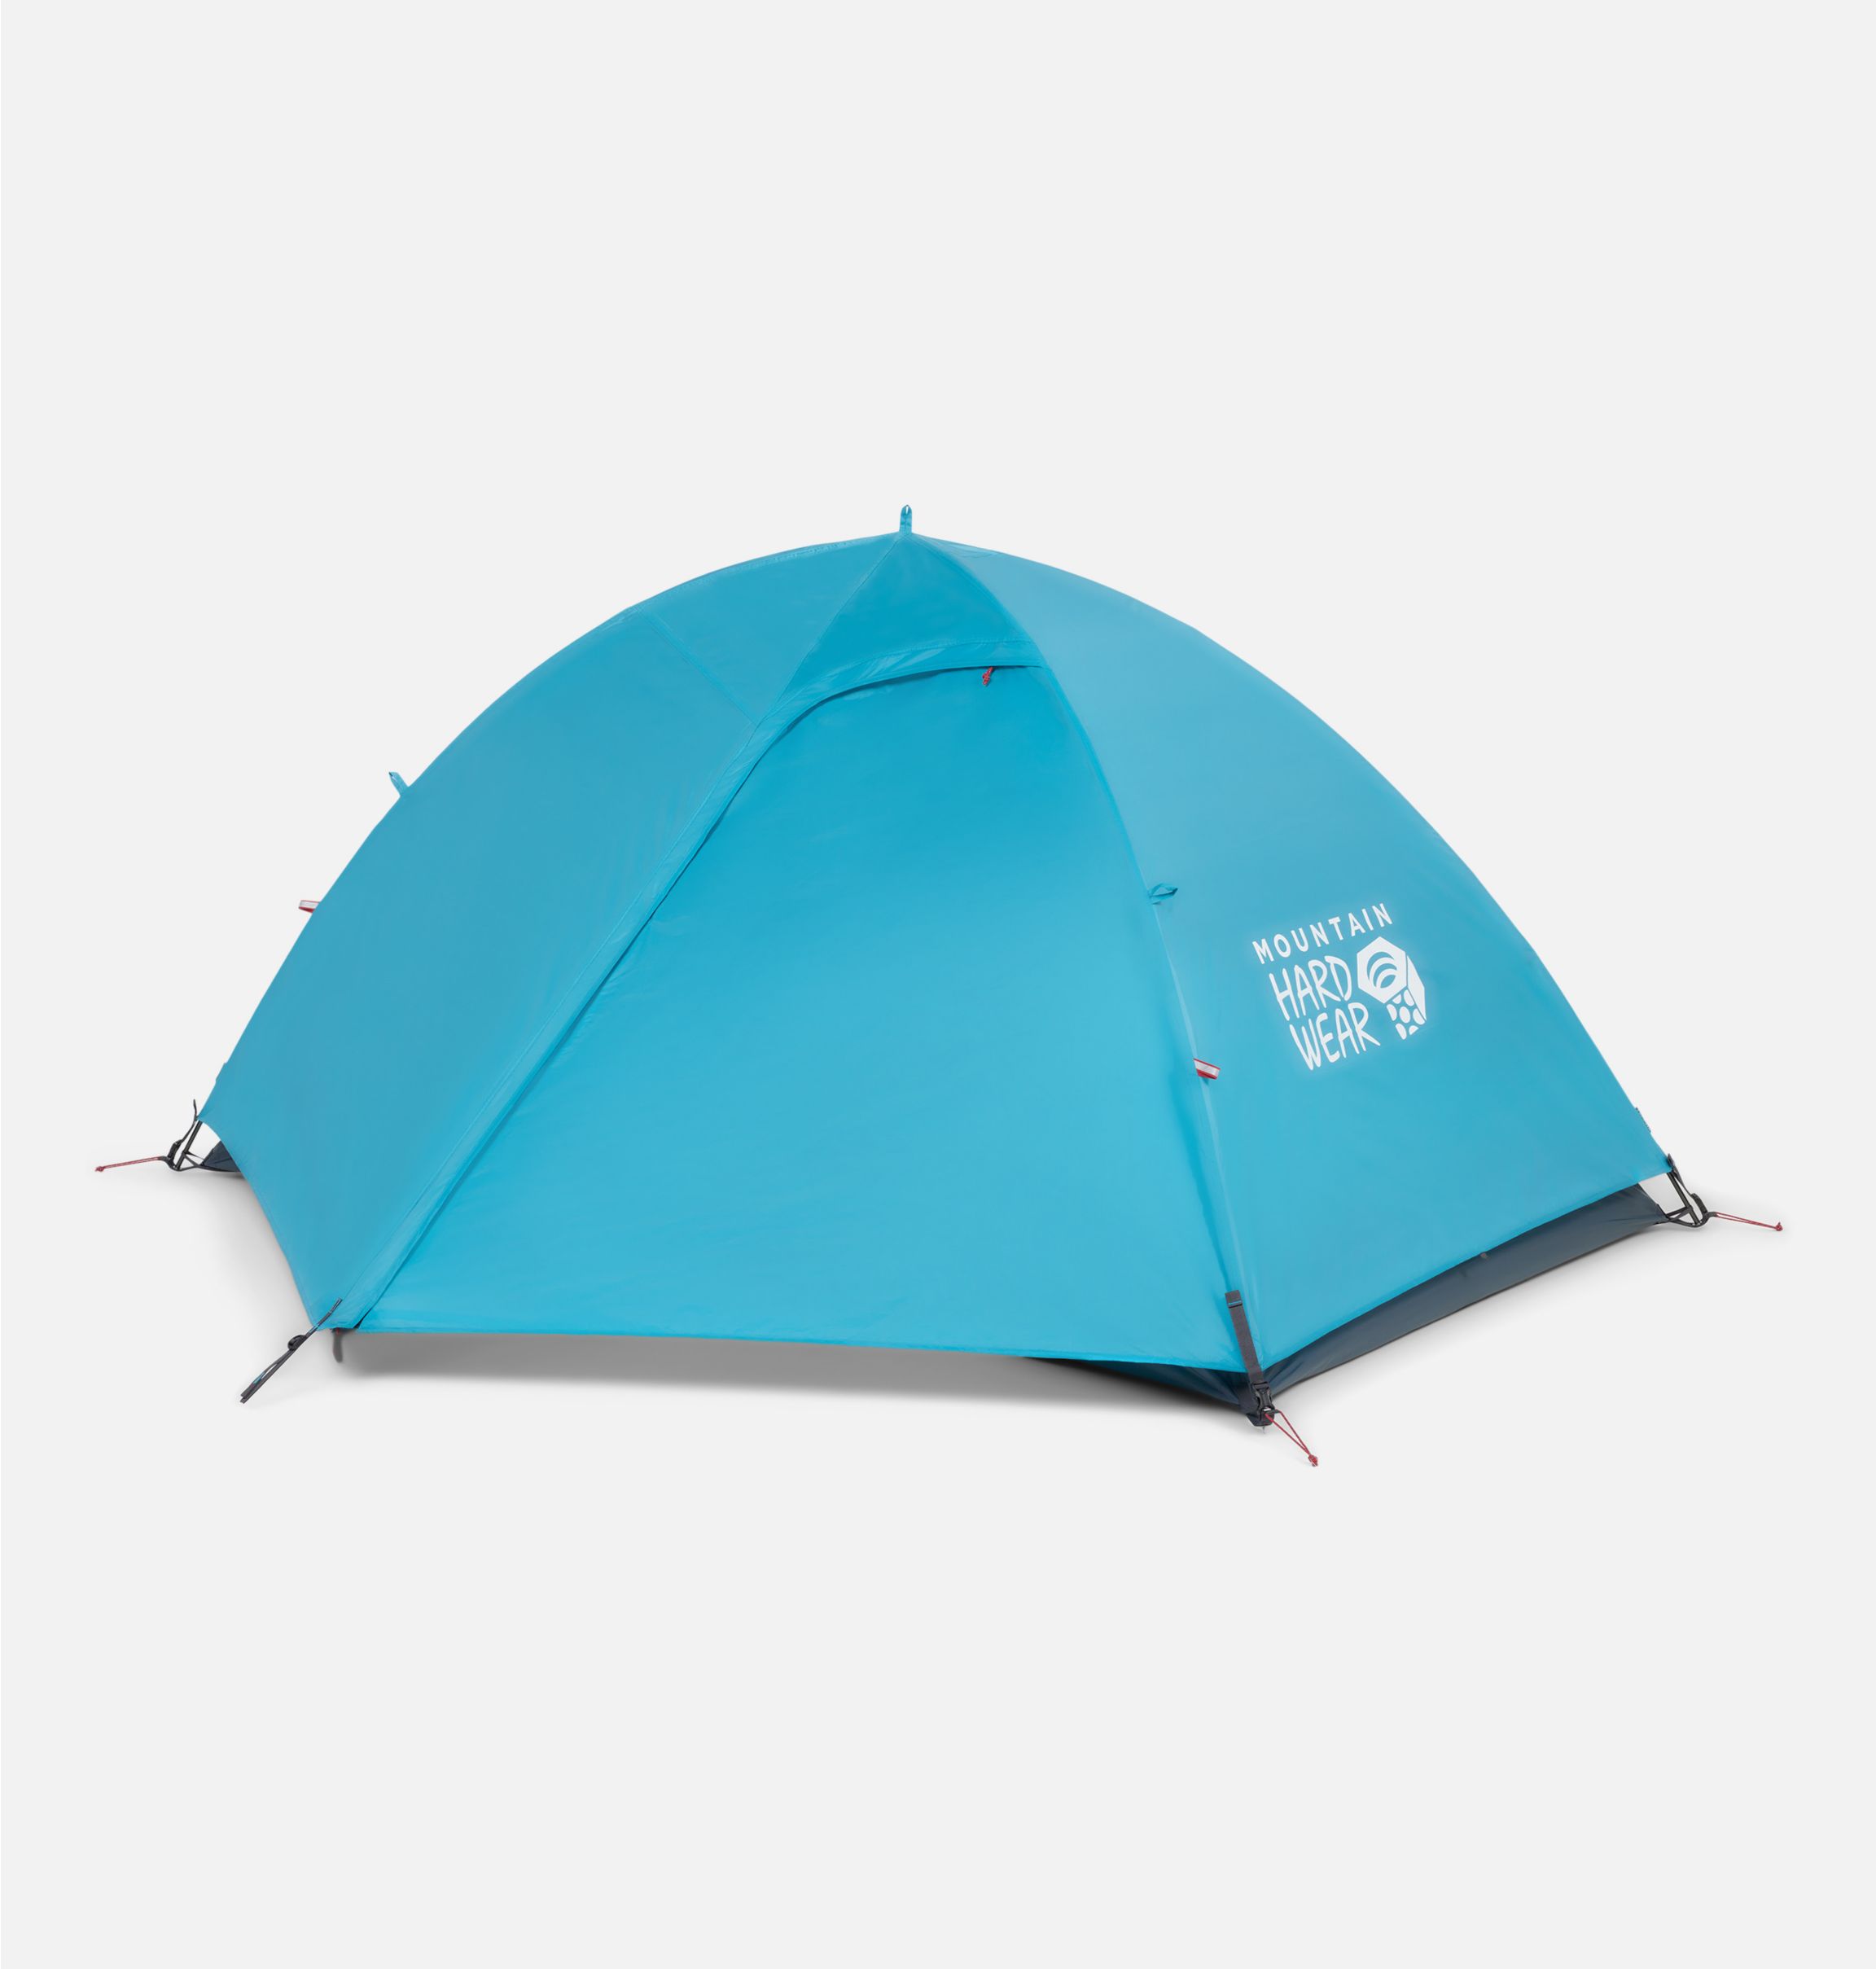 Meridian™ 2 Tent | Mountain Hardwear